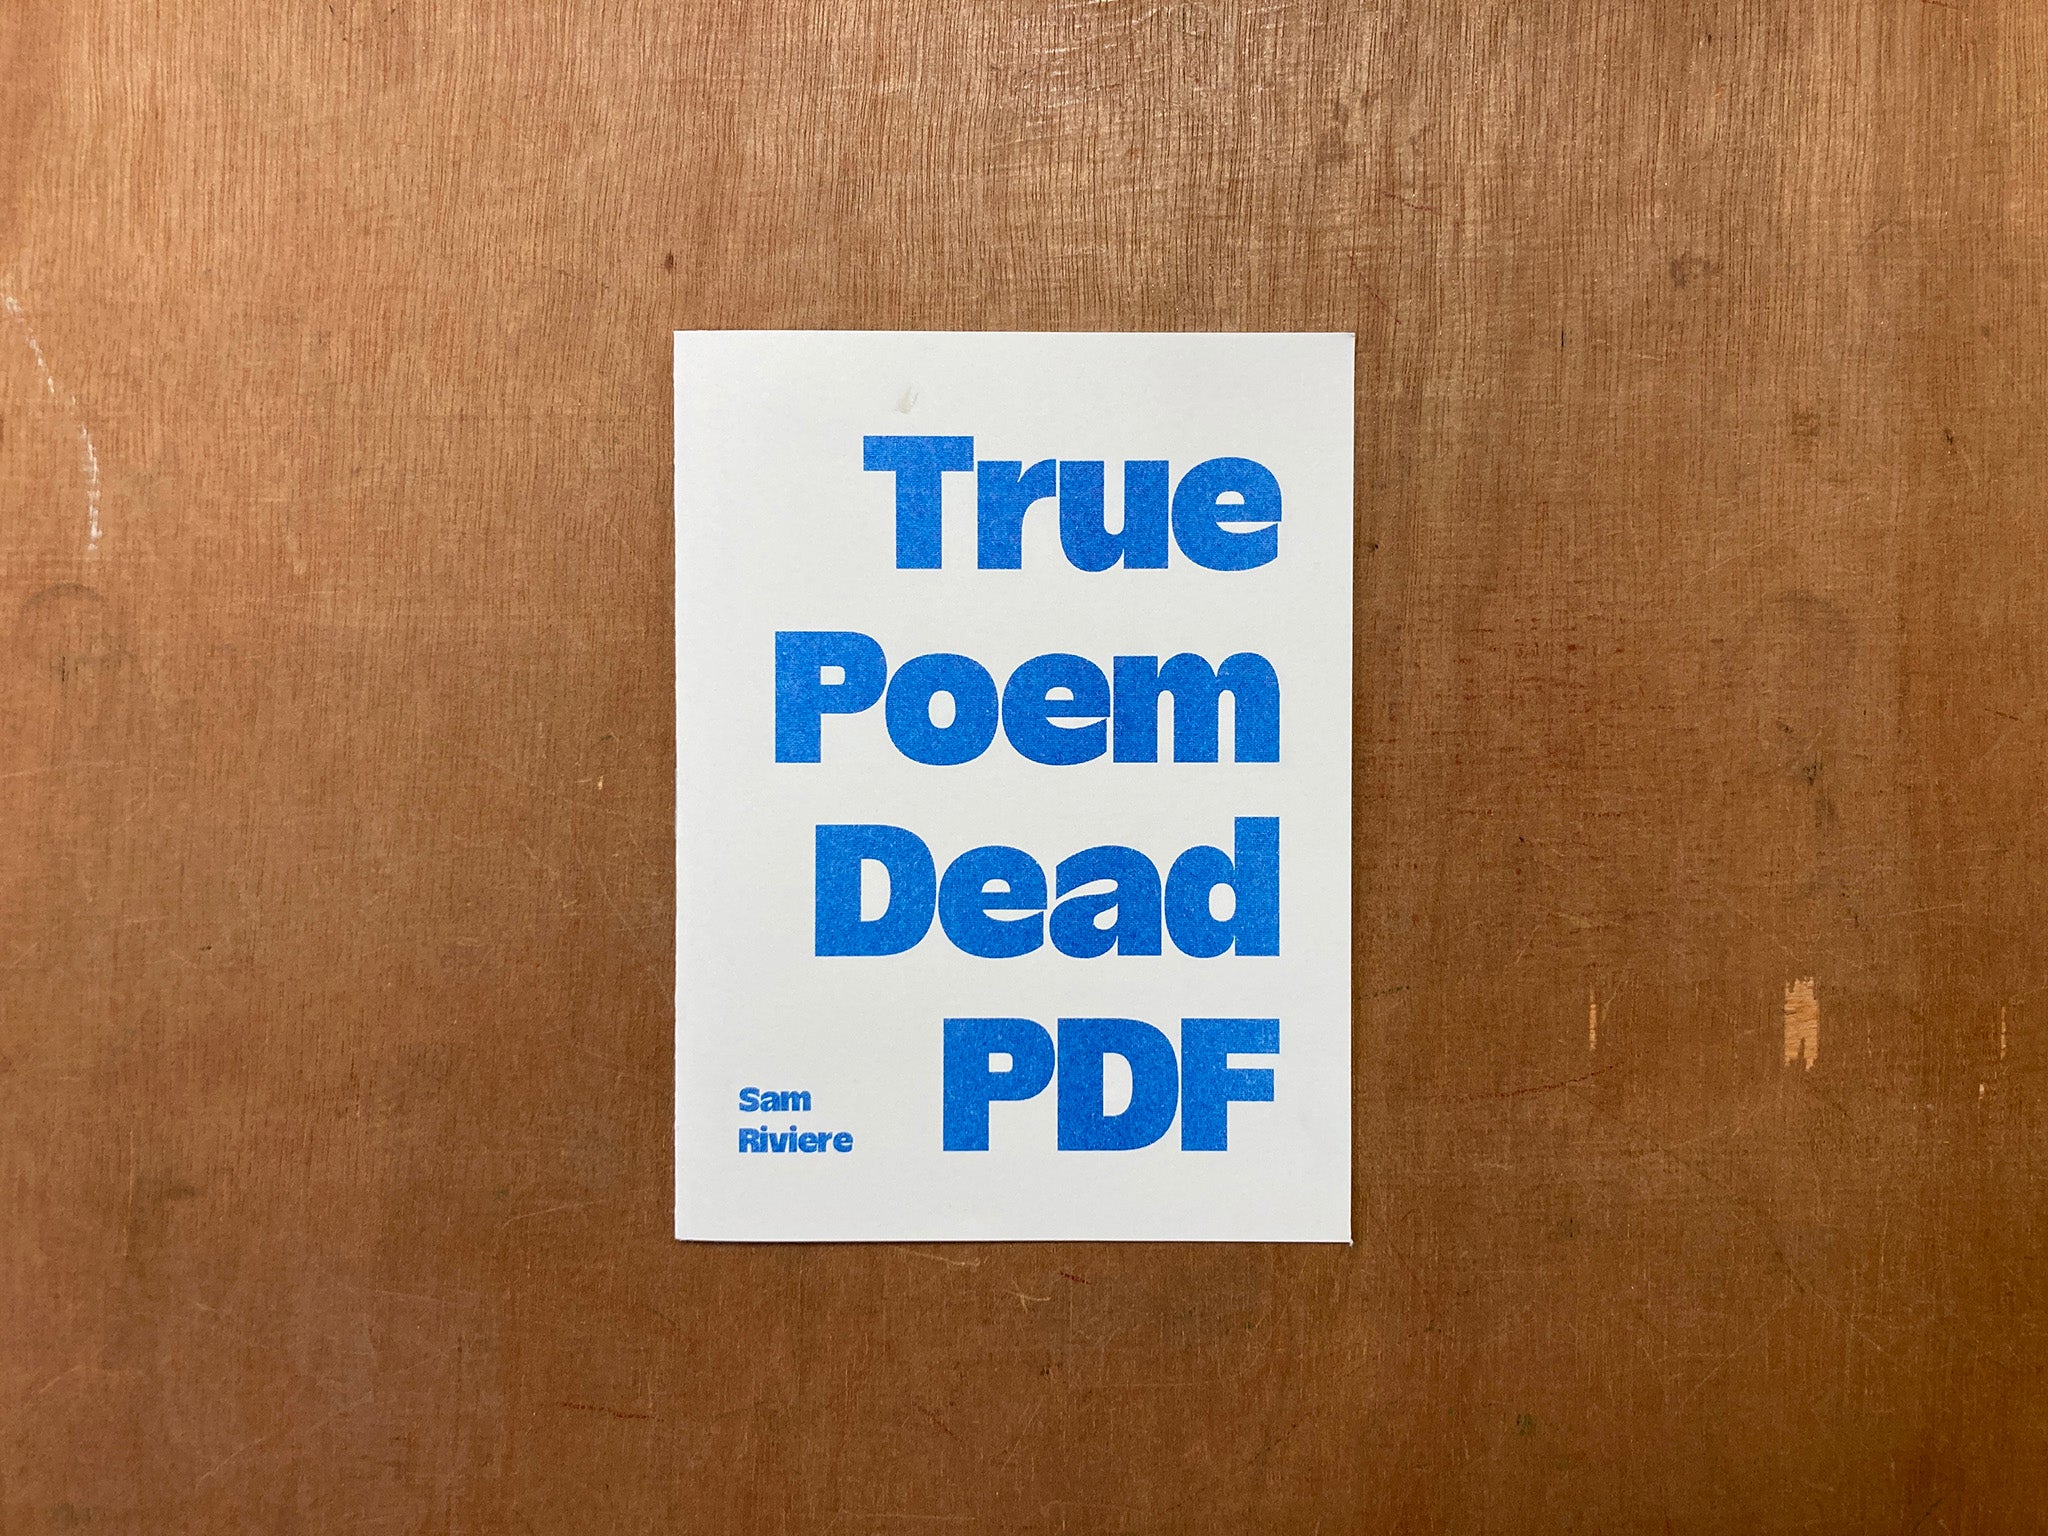 TRUE POEM / DEAD PDF by Sam Riviere